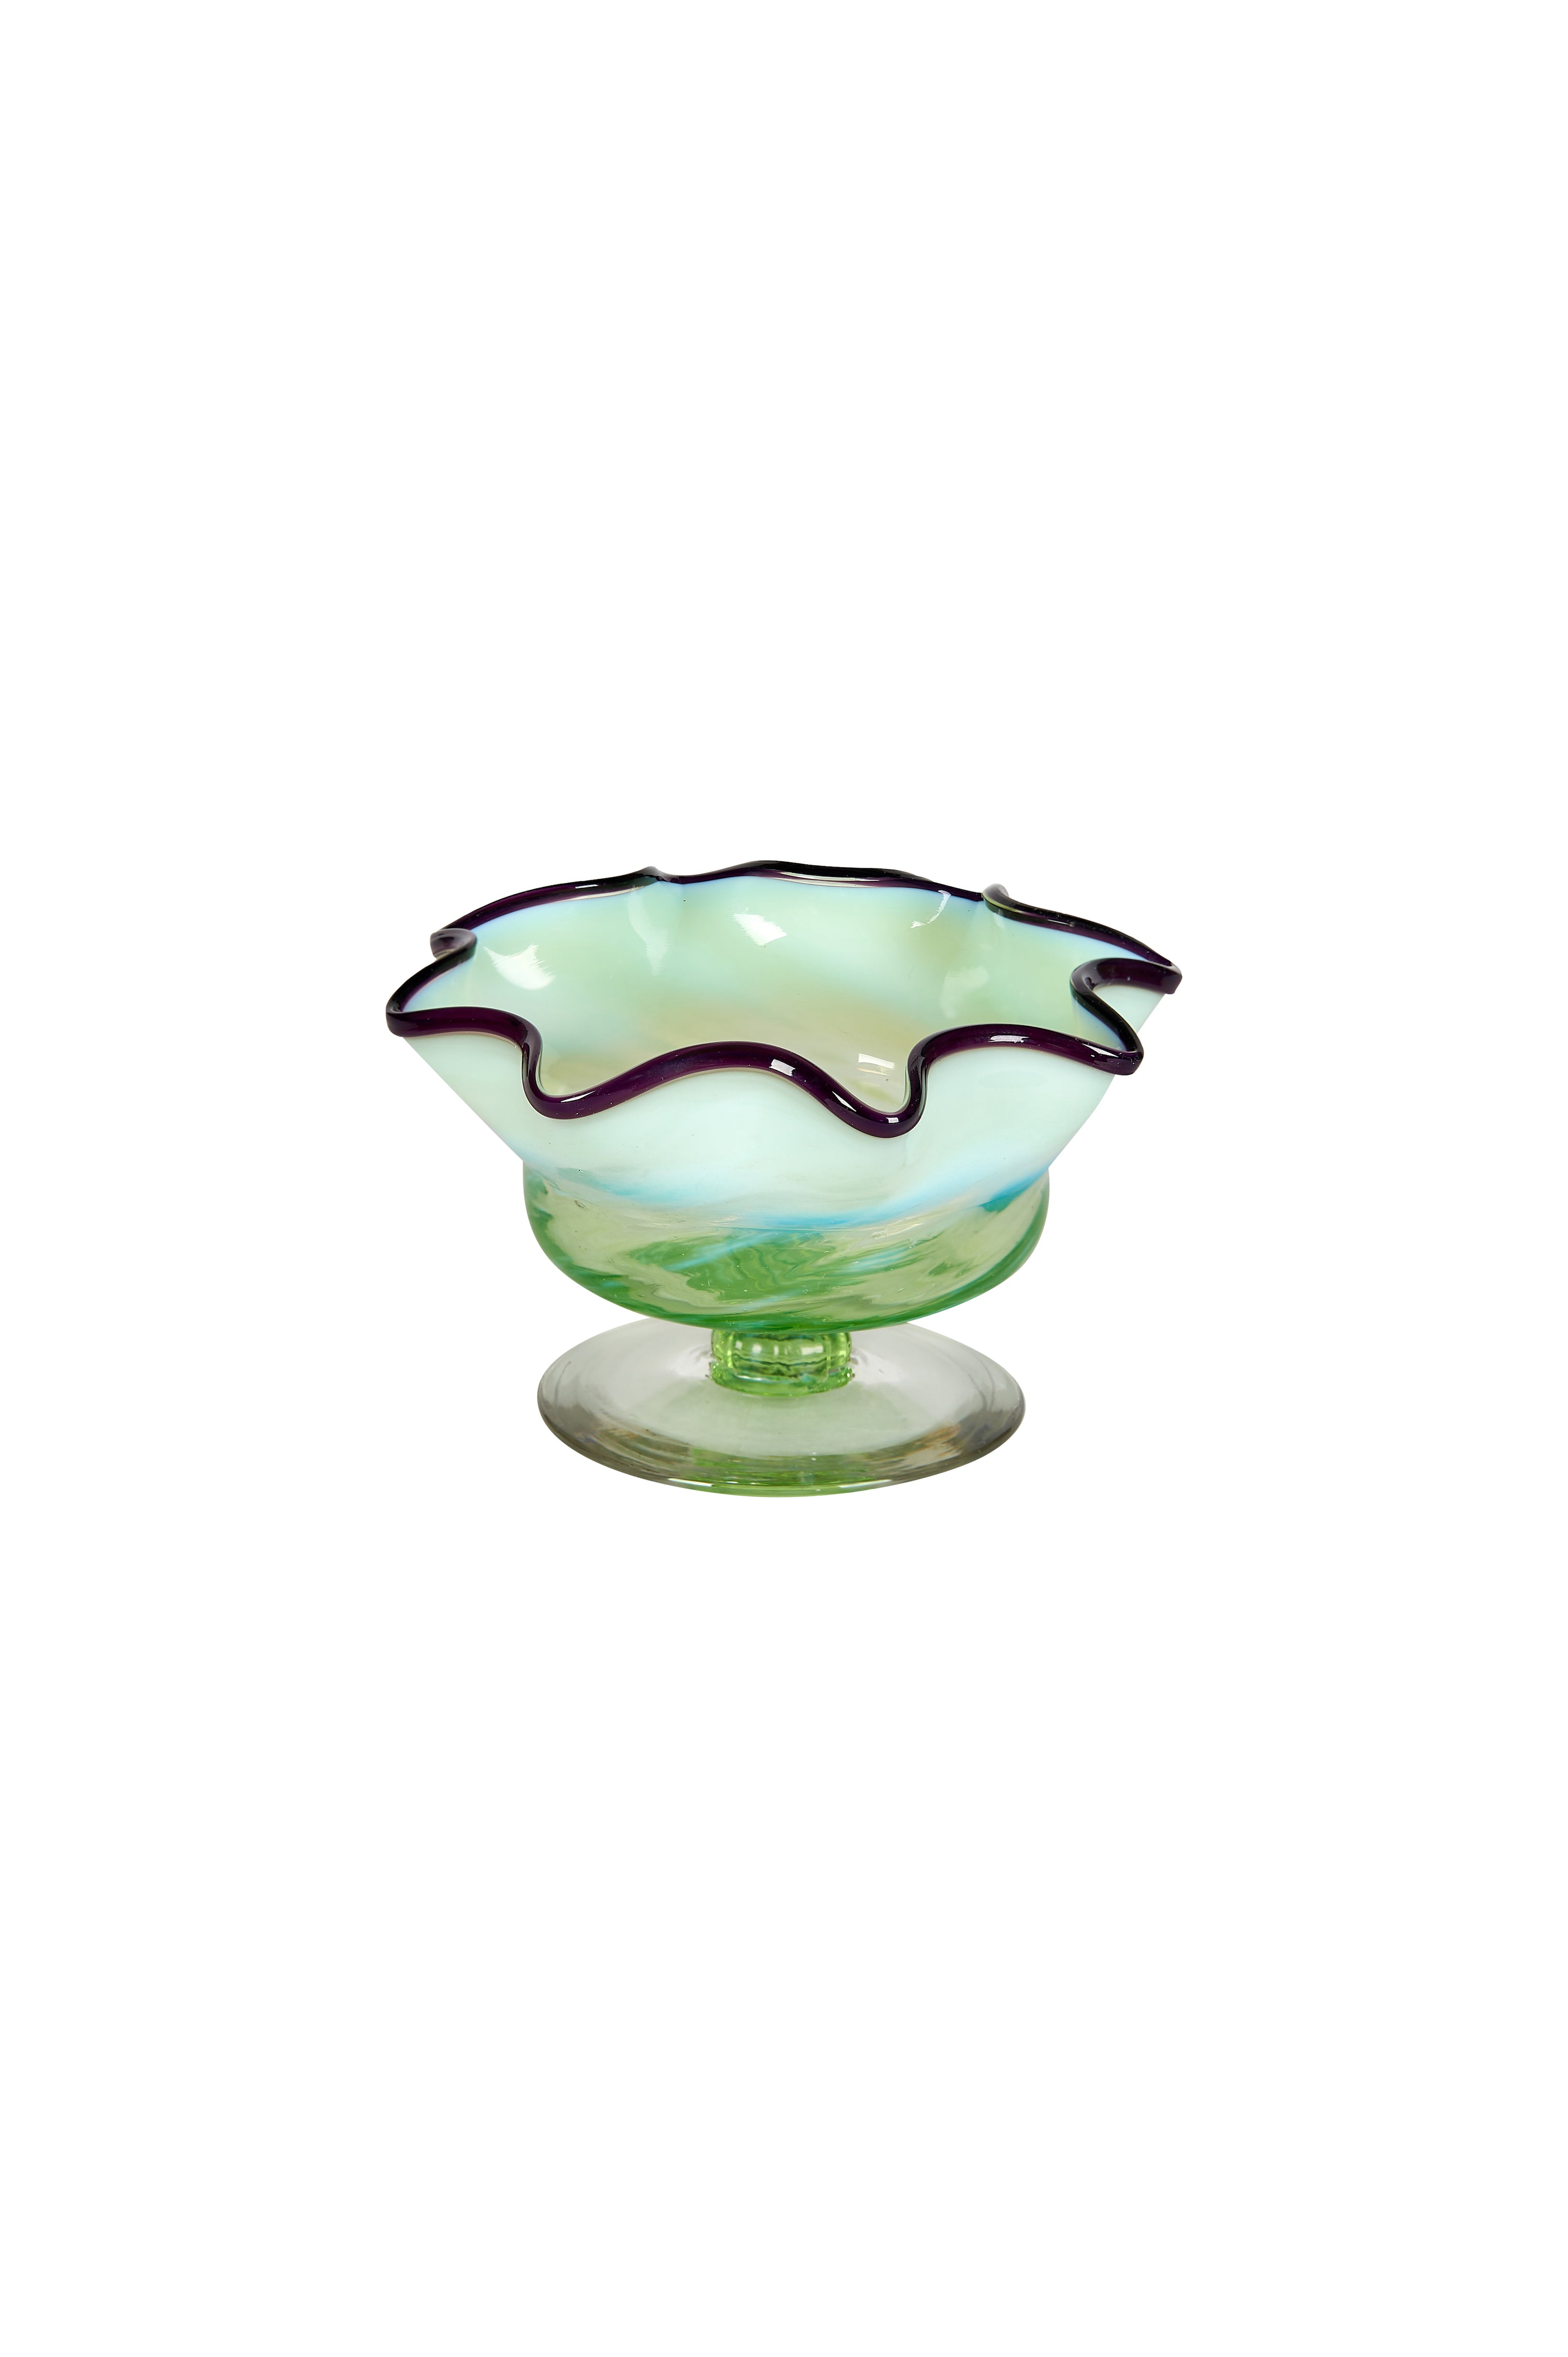 Antique Victorian Opalescent / Vaseline Green Glass Bowl